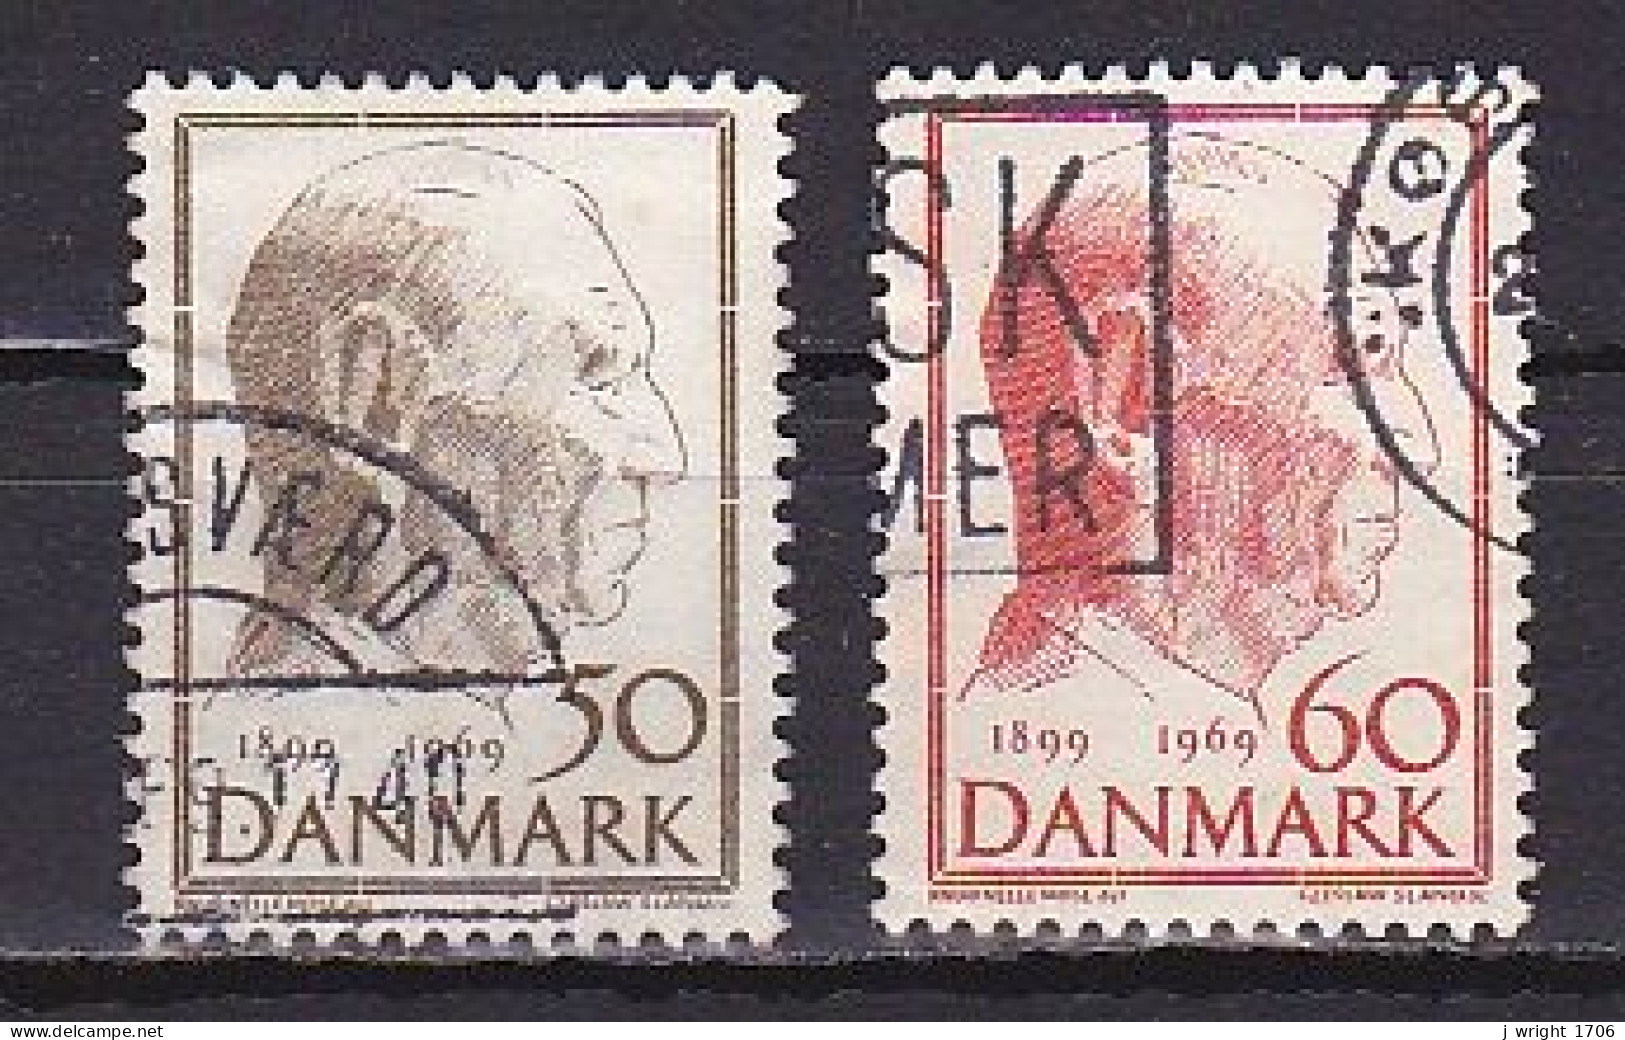 Denmark, 1969, King Frederik IX 70th Birthday, Set, USED - Usado